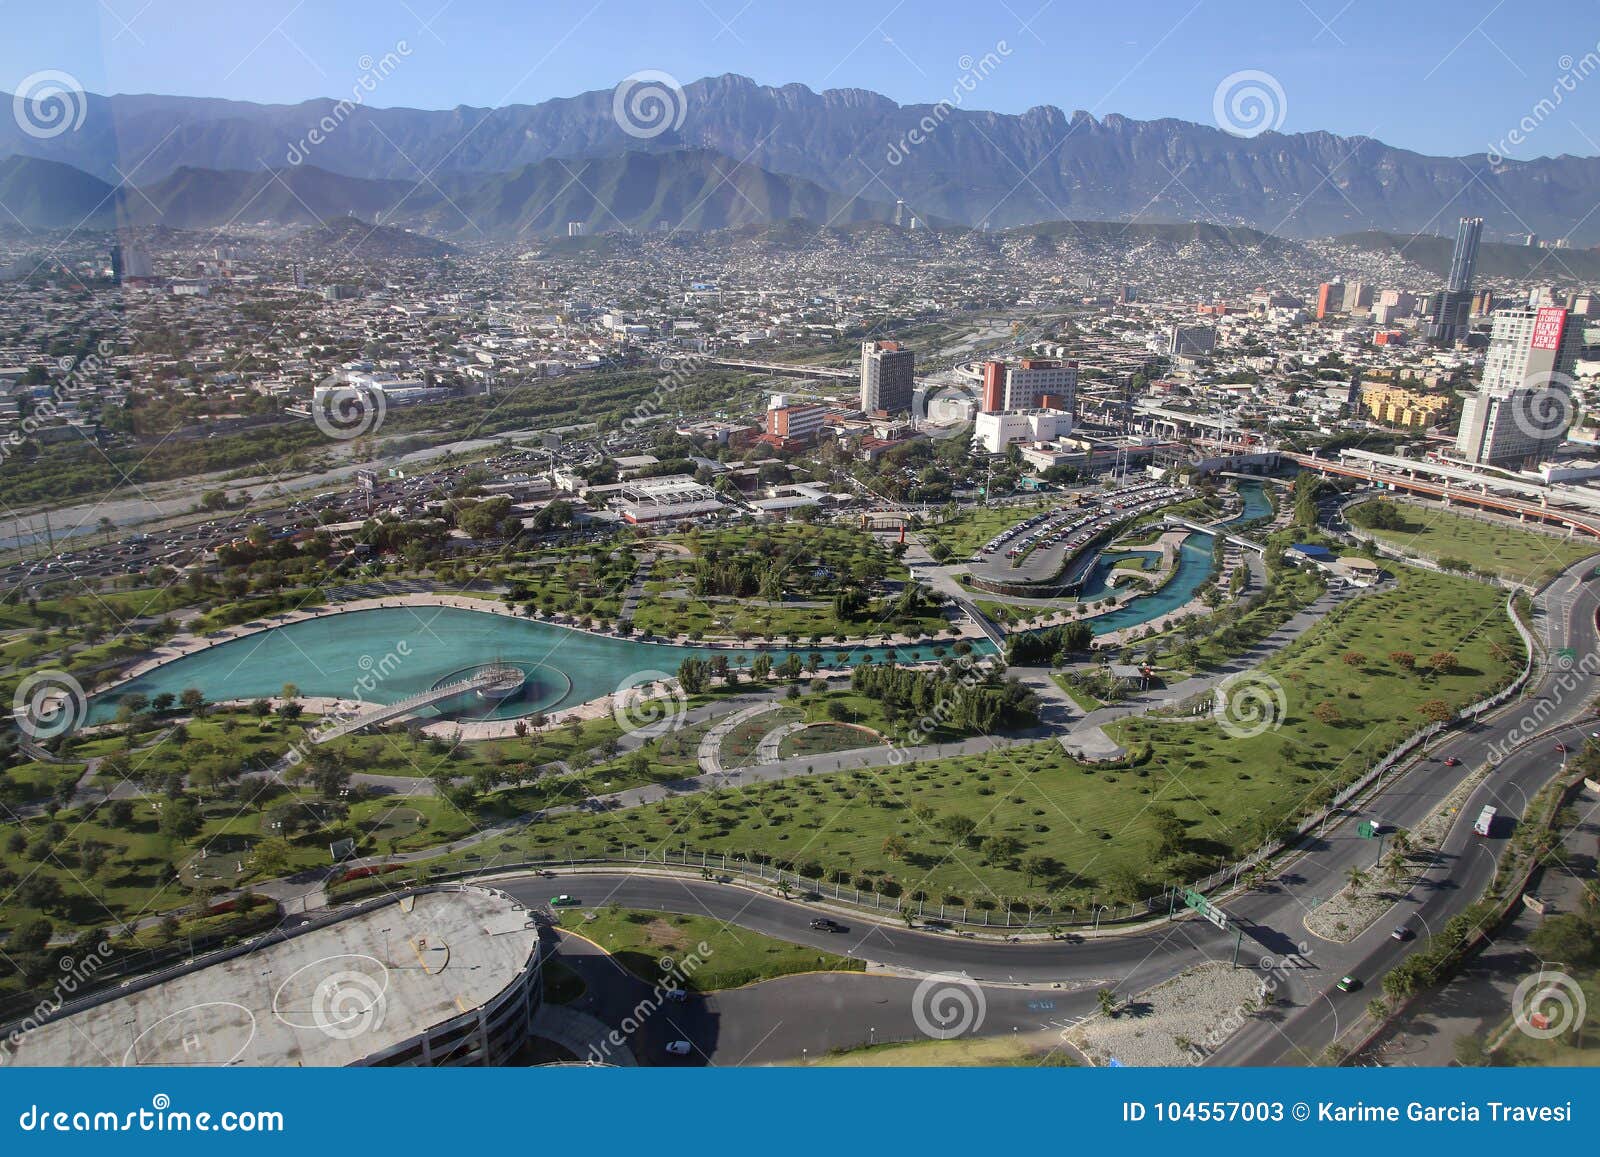 panoramic view of fundidora park in monterrey, mexico